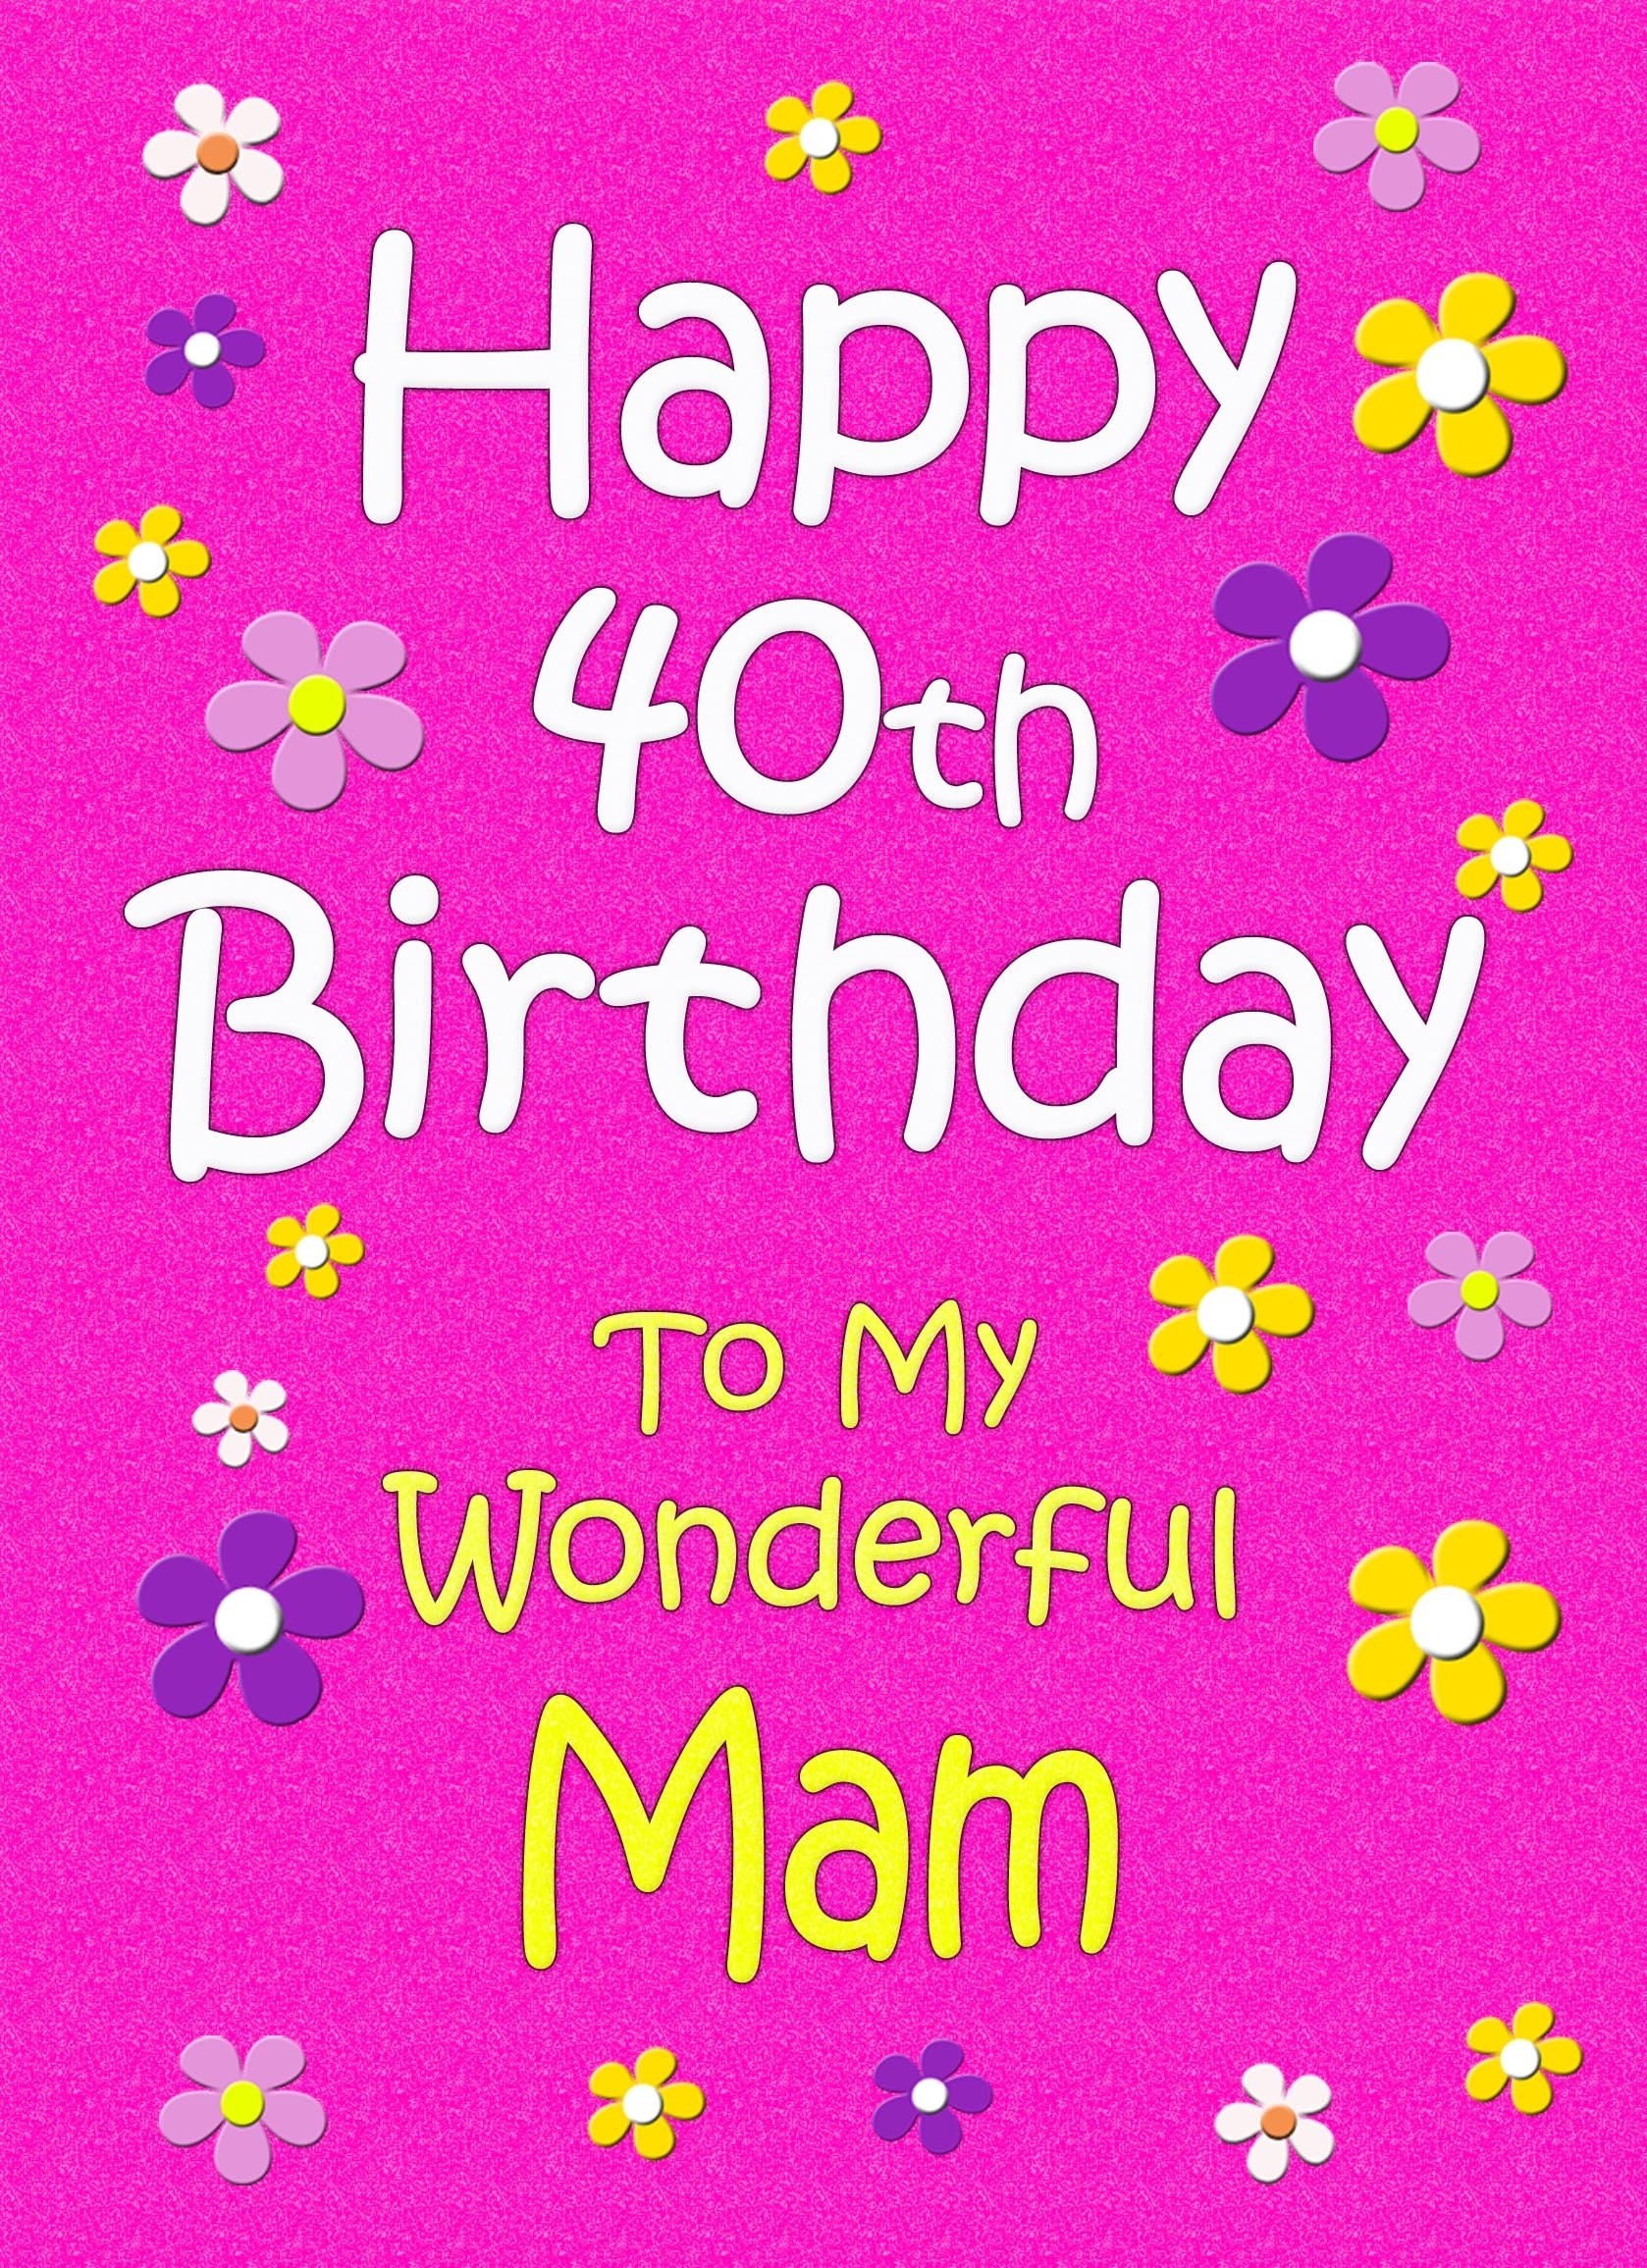 Mam 40th Birthday Card (Pink)